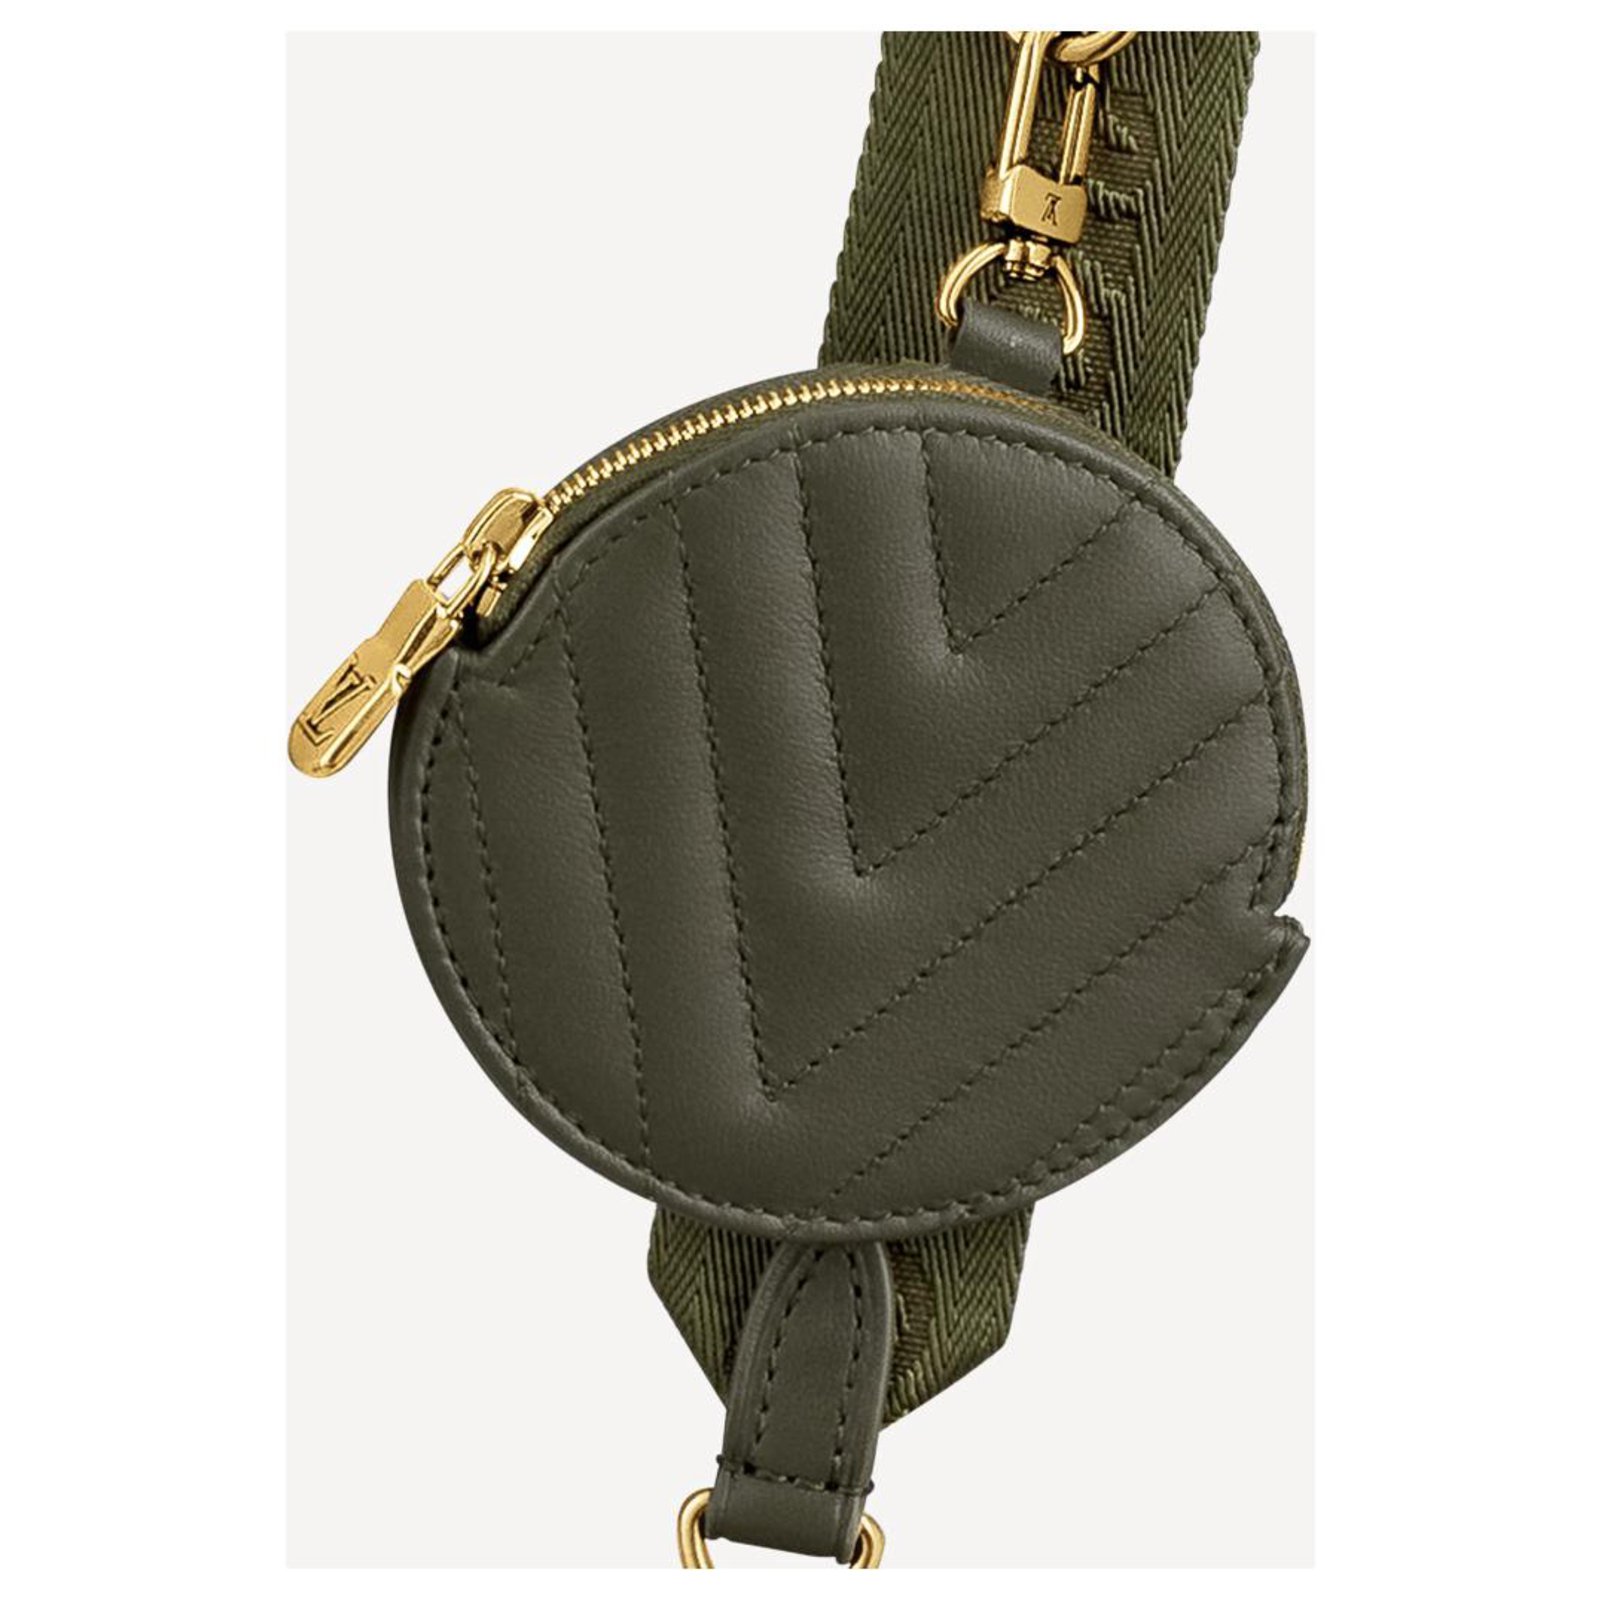 Louis Vuitton New Wave Multi-Pochette Bag, Green, One Size